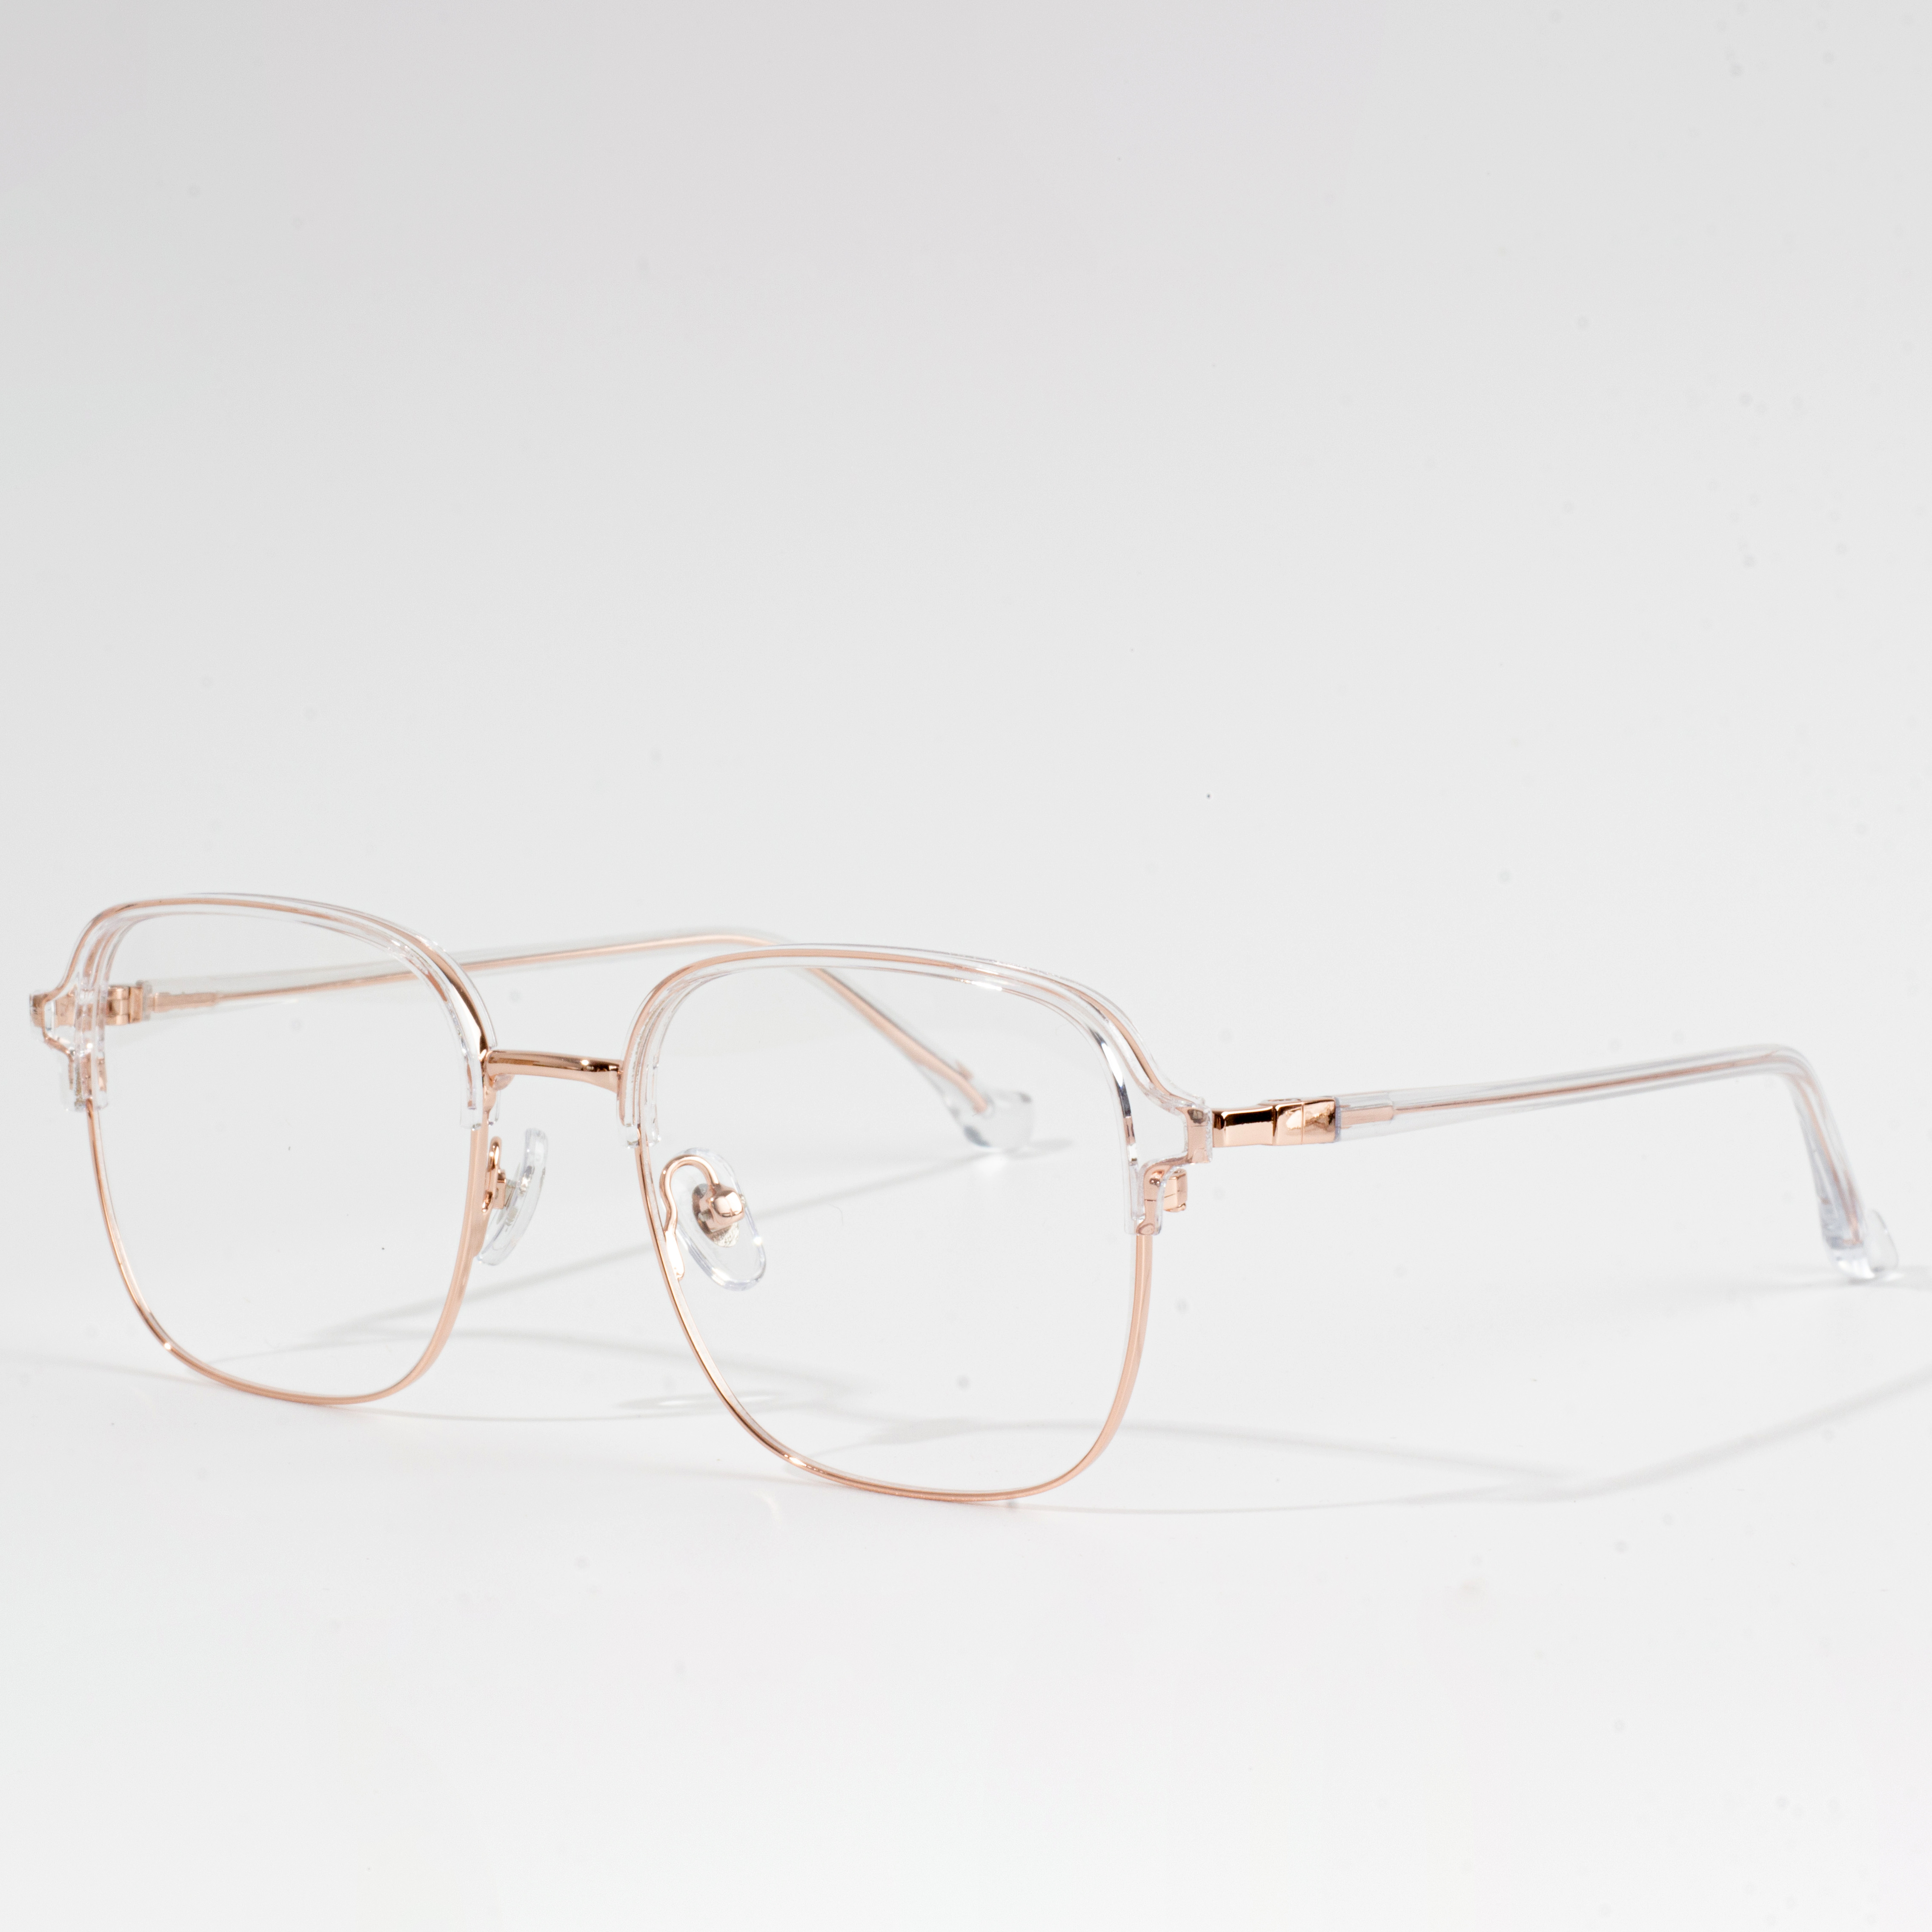 eyeglass frames online